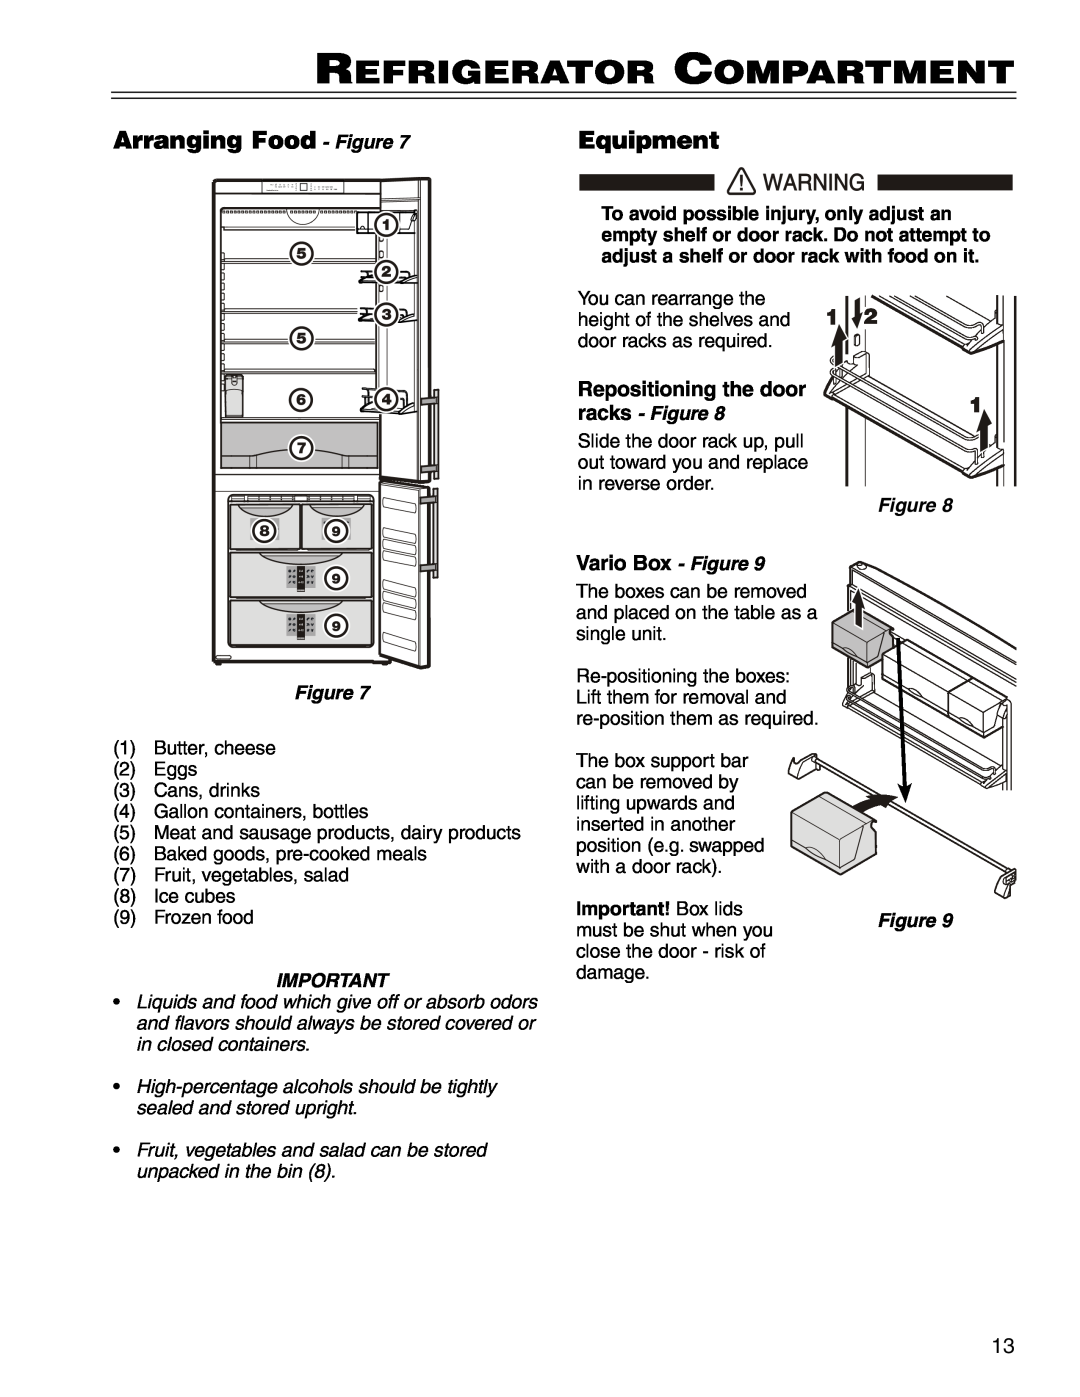 Liebherr CS 1640 7082 481-01 manual Refrigerator Compartment, Arranging Food - Figure, Equipment, Vario Box - Figure 